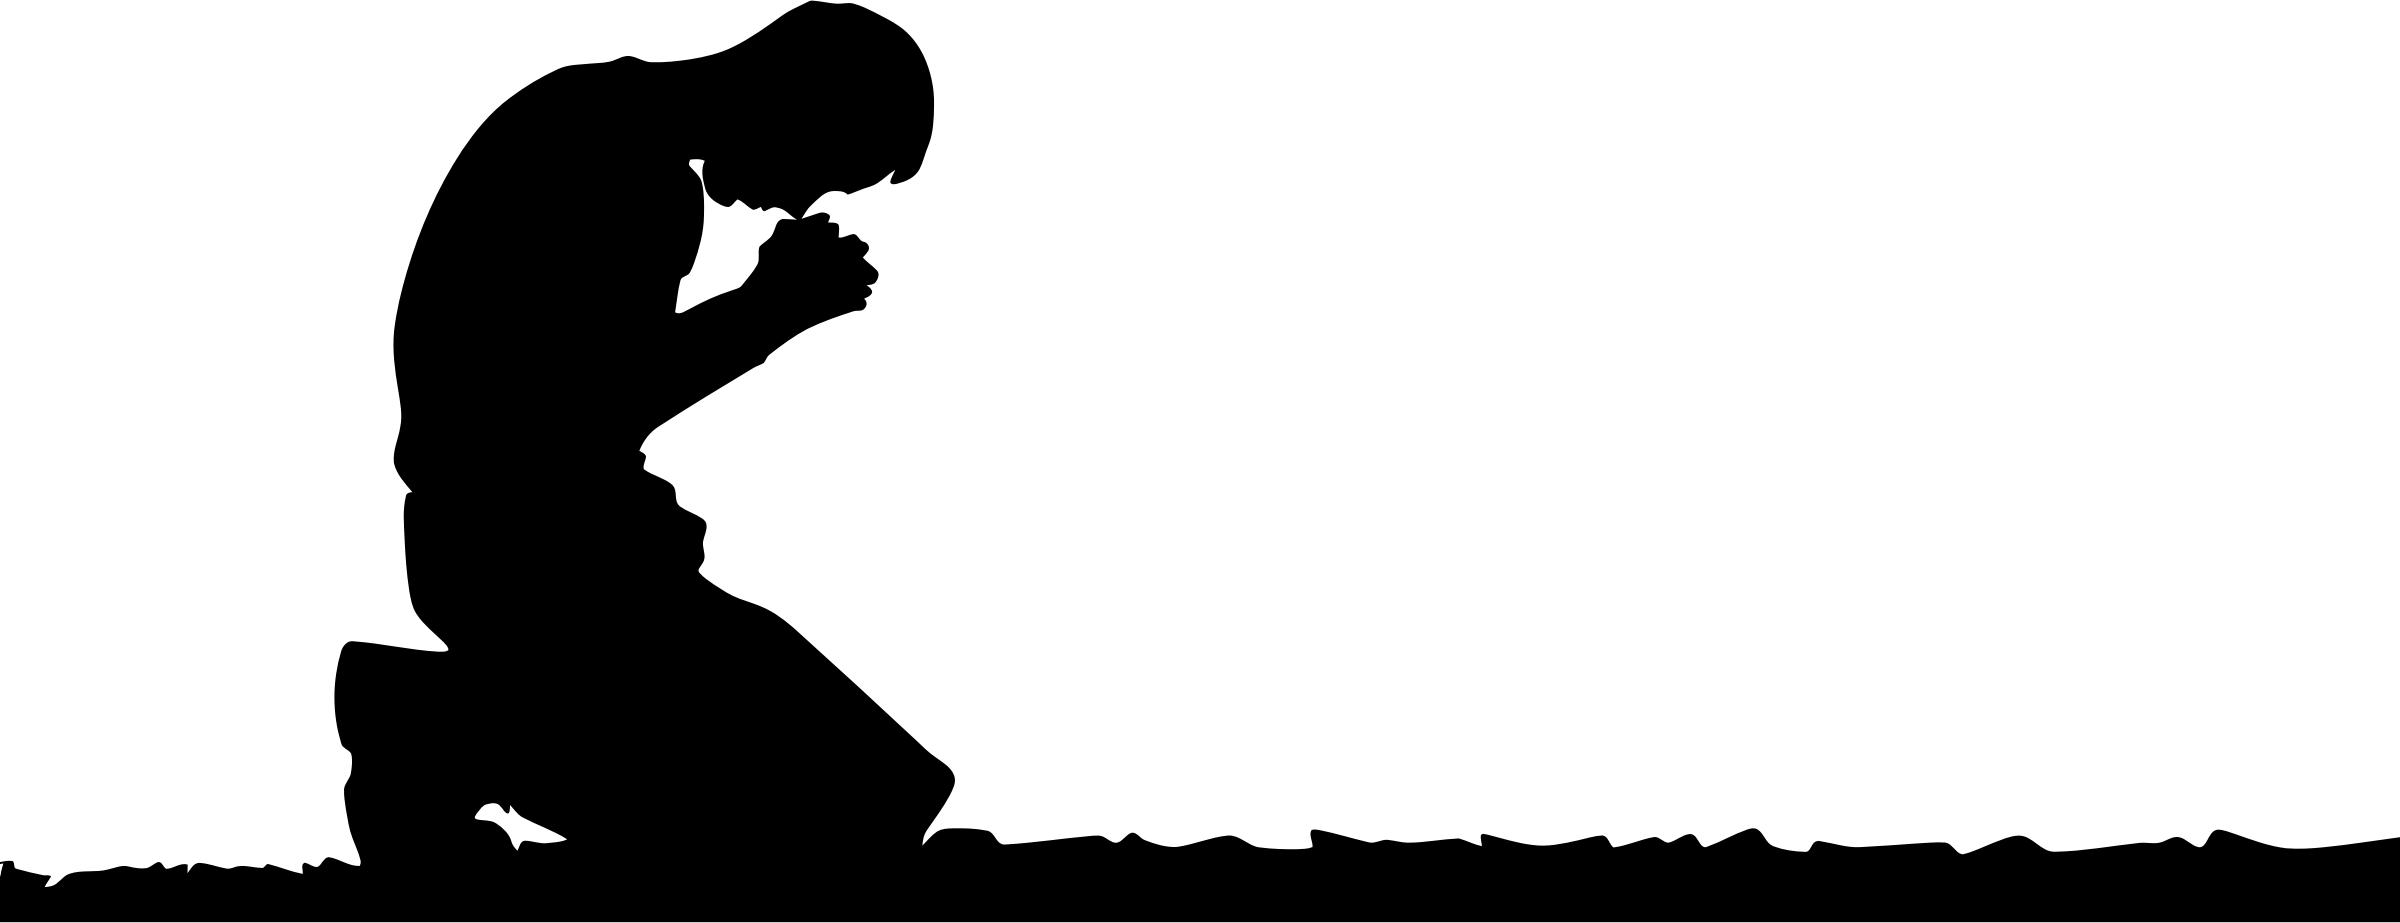 Man Kneeling In Prayer Silhouette png icons